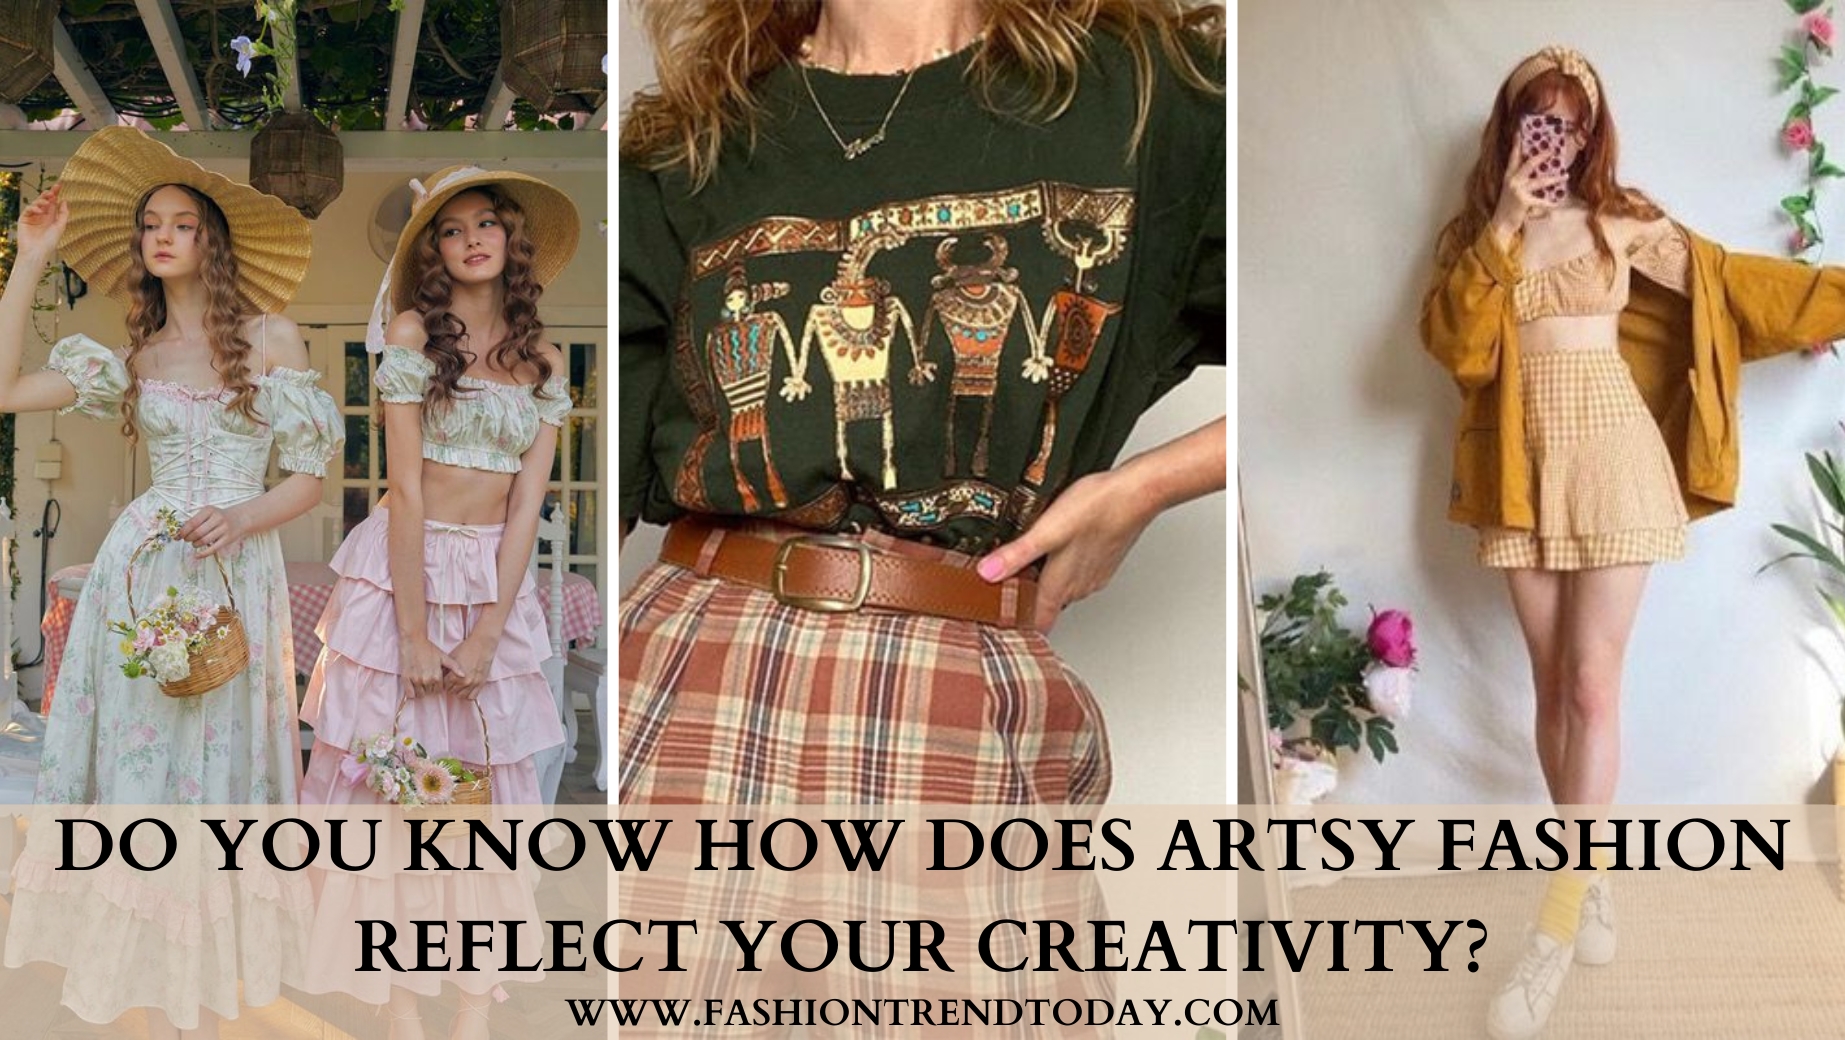 How Does Artsy Fashion Reflect Your Creativity?